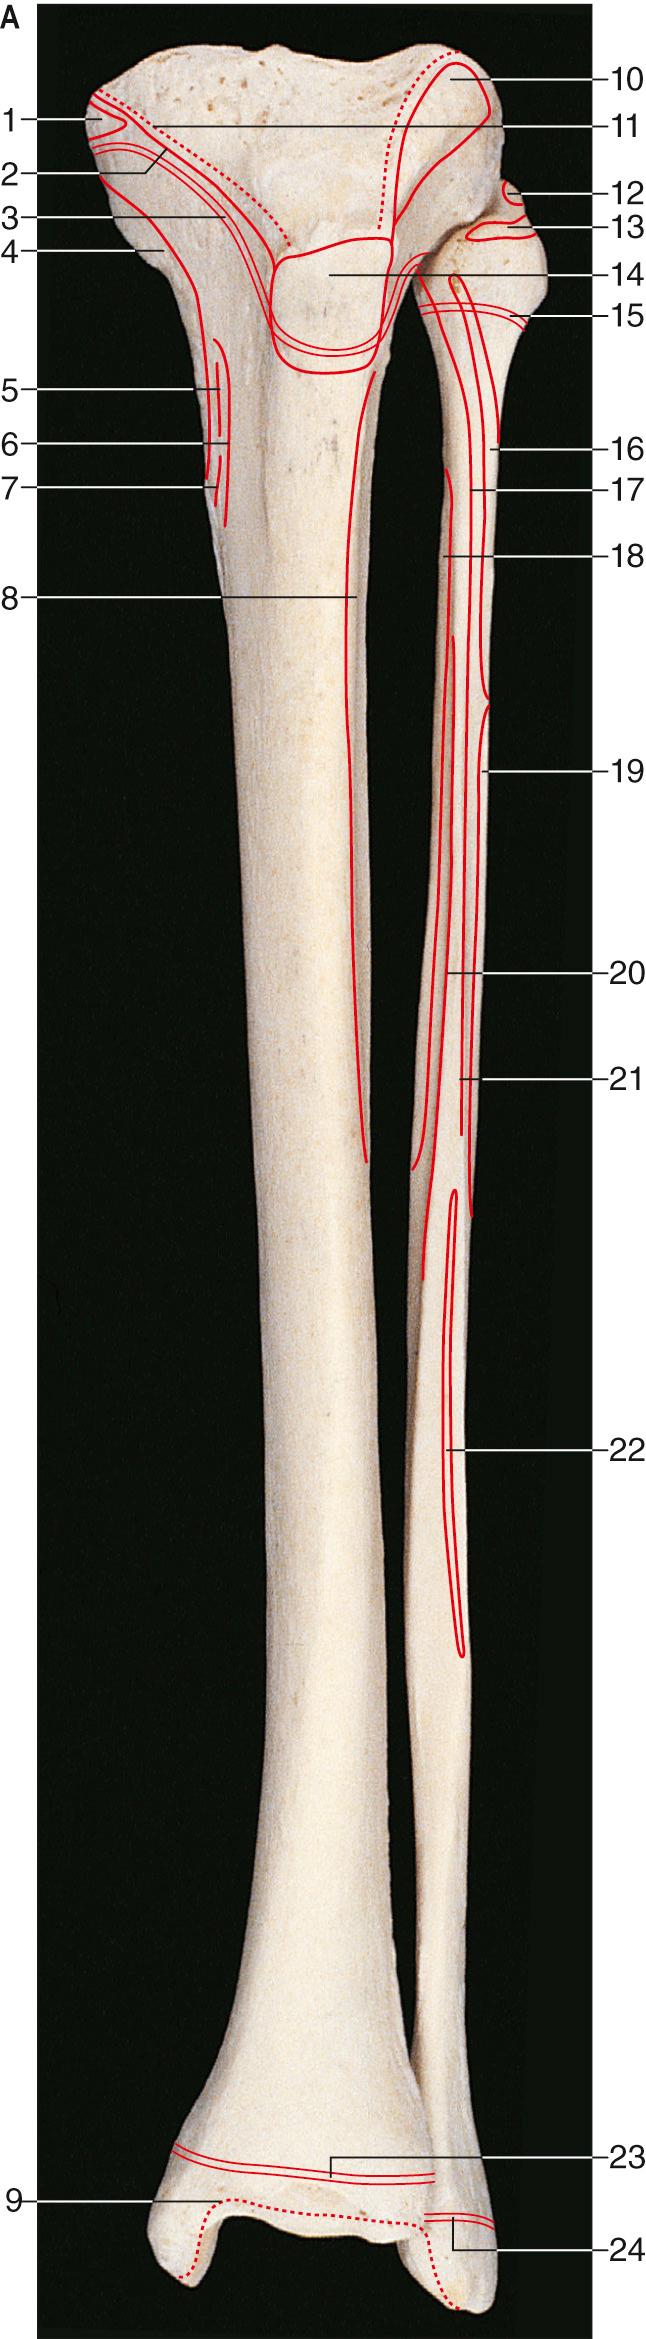 Fig. 84.1, The muscle attachments of the left tibia and fibula. A , Anterior aspect. Key: 1, semimembranosus; 2, medial patellar retinaculum; 3, epiphysial line (growth plate); 4, tibial collateral ligament; 5, gracilis; 6, sartorius; 7, semitendinosus; 8, tibialis anterior; 9, capsular attachment; 10, iliotibial tract; 11, capsular attachment; 12, fibular collateral ligament; 13, biceps femoris; 14, patellar ligament; 15, epiphysial line (growth plate); 16, fibularis longus; 17, extensor digitorum longus; 18, tibialis posterior; 19, fibularis brevis; 20, extensor hallucis longus; 21, extensor digitorum longus; 22, fibularis tertius; 23, epiphysial line (growth plate); 24, epiphysial line (growth plate). B , Posterior aspect. Key: 1, gap in capsule for popliteus tendon; 2, soleus; 3, flexor hallucis longus; 4, fibularis brevis; 5, epiphysial line (growth plate); 6, capsular attachment; 7, semimembranosus; 8, epiphysial lines (growth plates); 9, popliteus; 10, soleus; 11, tibialis posterior; 12, flexor digitorum longus; 13, epiphysial line (growth plate); 14, capsular attachment.